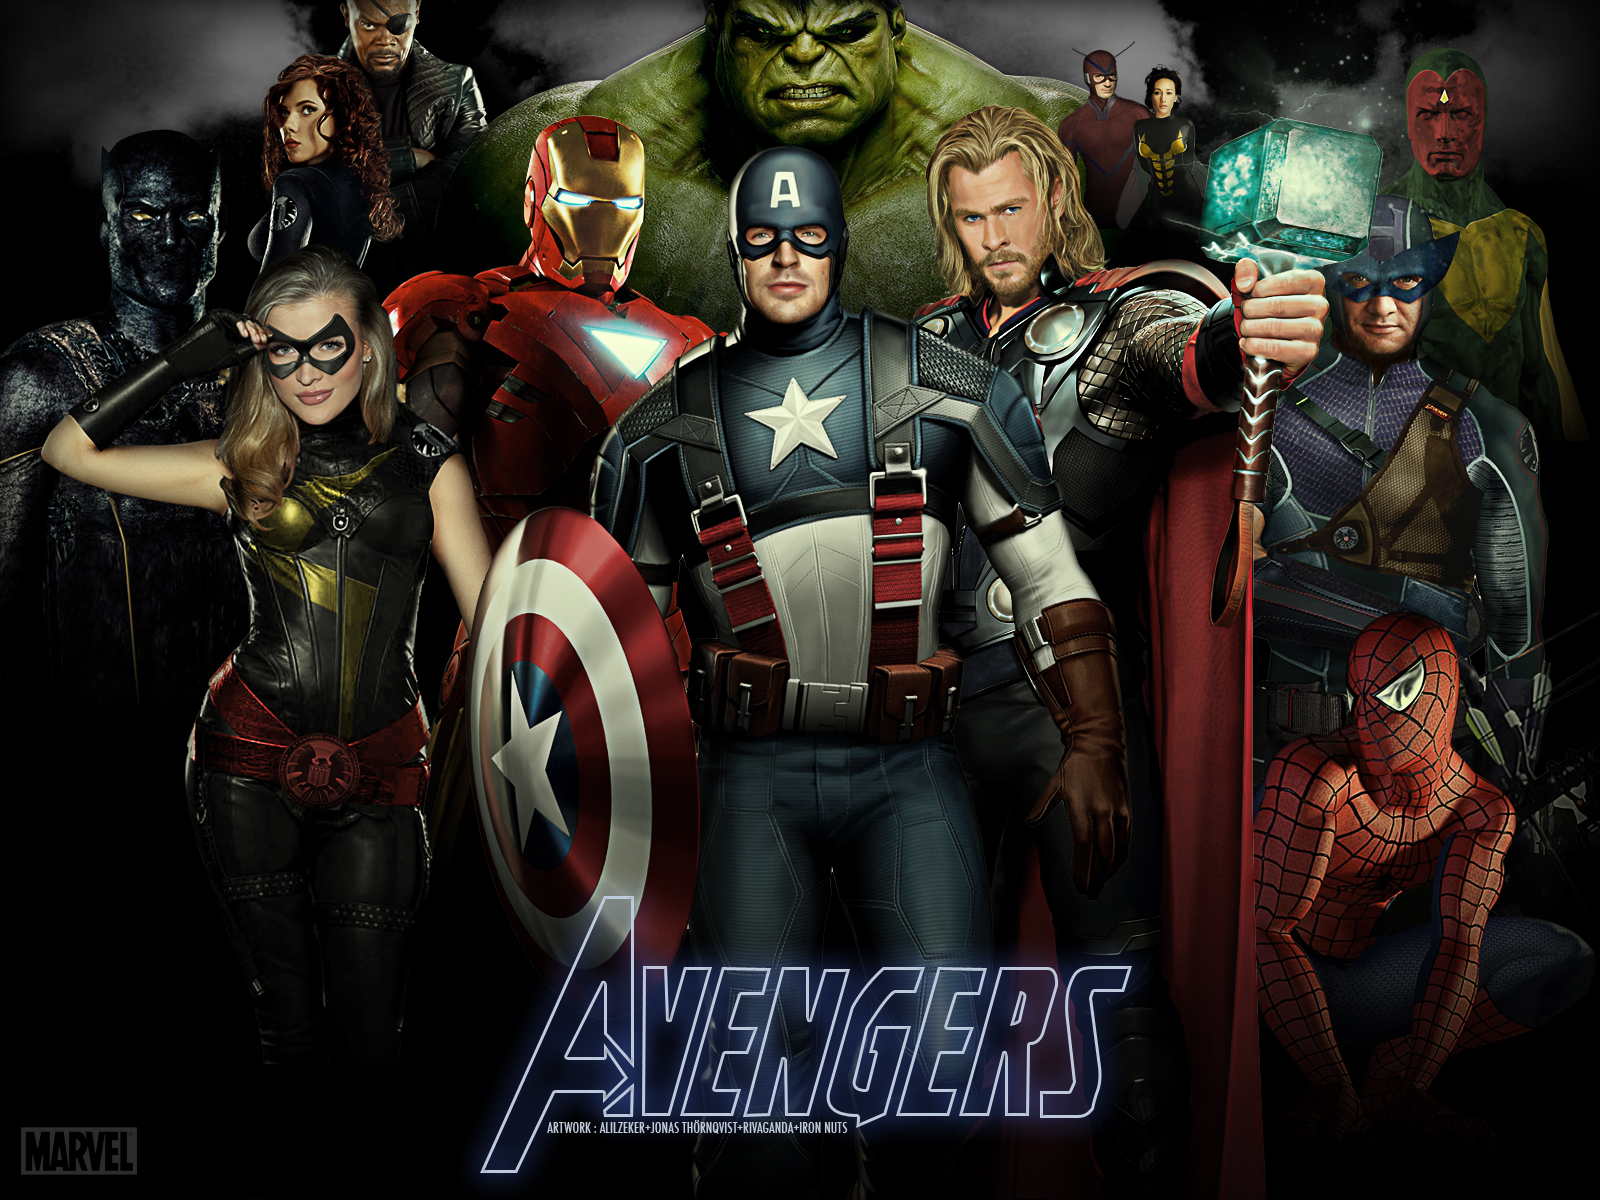 https://blogger.googleusercontent.com/img/b/R29vZ2xl/AVvXsEhl_AhGrbP2ZHGgYyB5eJWePqYXIxvyNjiWIQM0ASy3Jg9Dwb3iUDUZl3aZkETHyXrDS5wtAkdO9RdcsIFYSKdEKqiFoSOWqI9zd34zwslu50Gbl25QIhBop9DinzNBGT5B9rCw_89dAM1f/s1600/Watch+The+Avengers+2012+Full+English+Movie+Online_wallpapers_images_posters.jpg